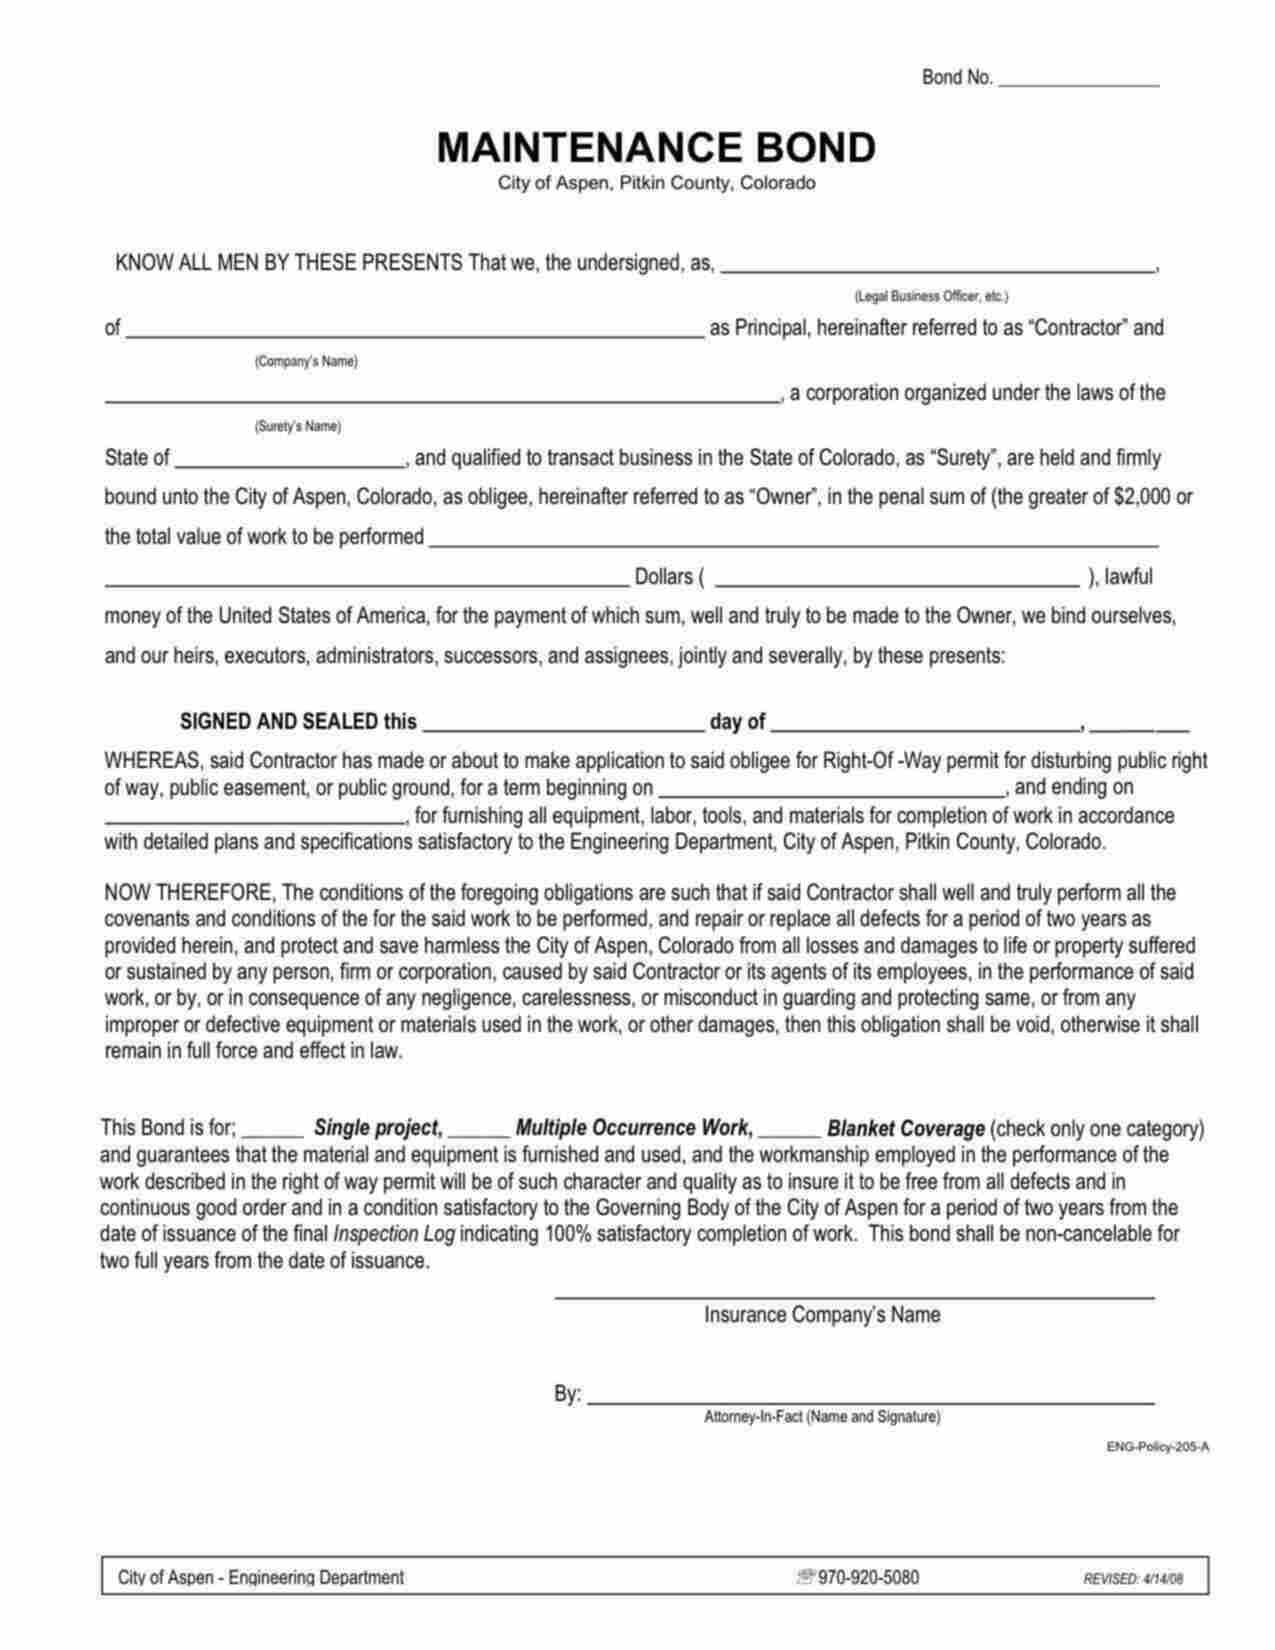 Colorado Maintenance - Single Project Bond Form